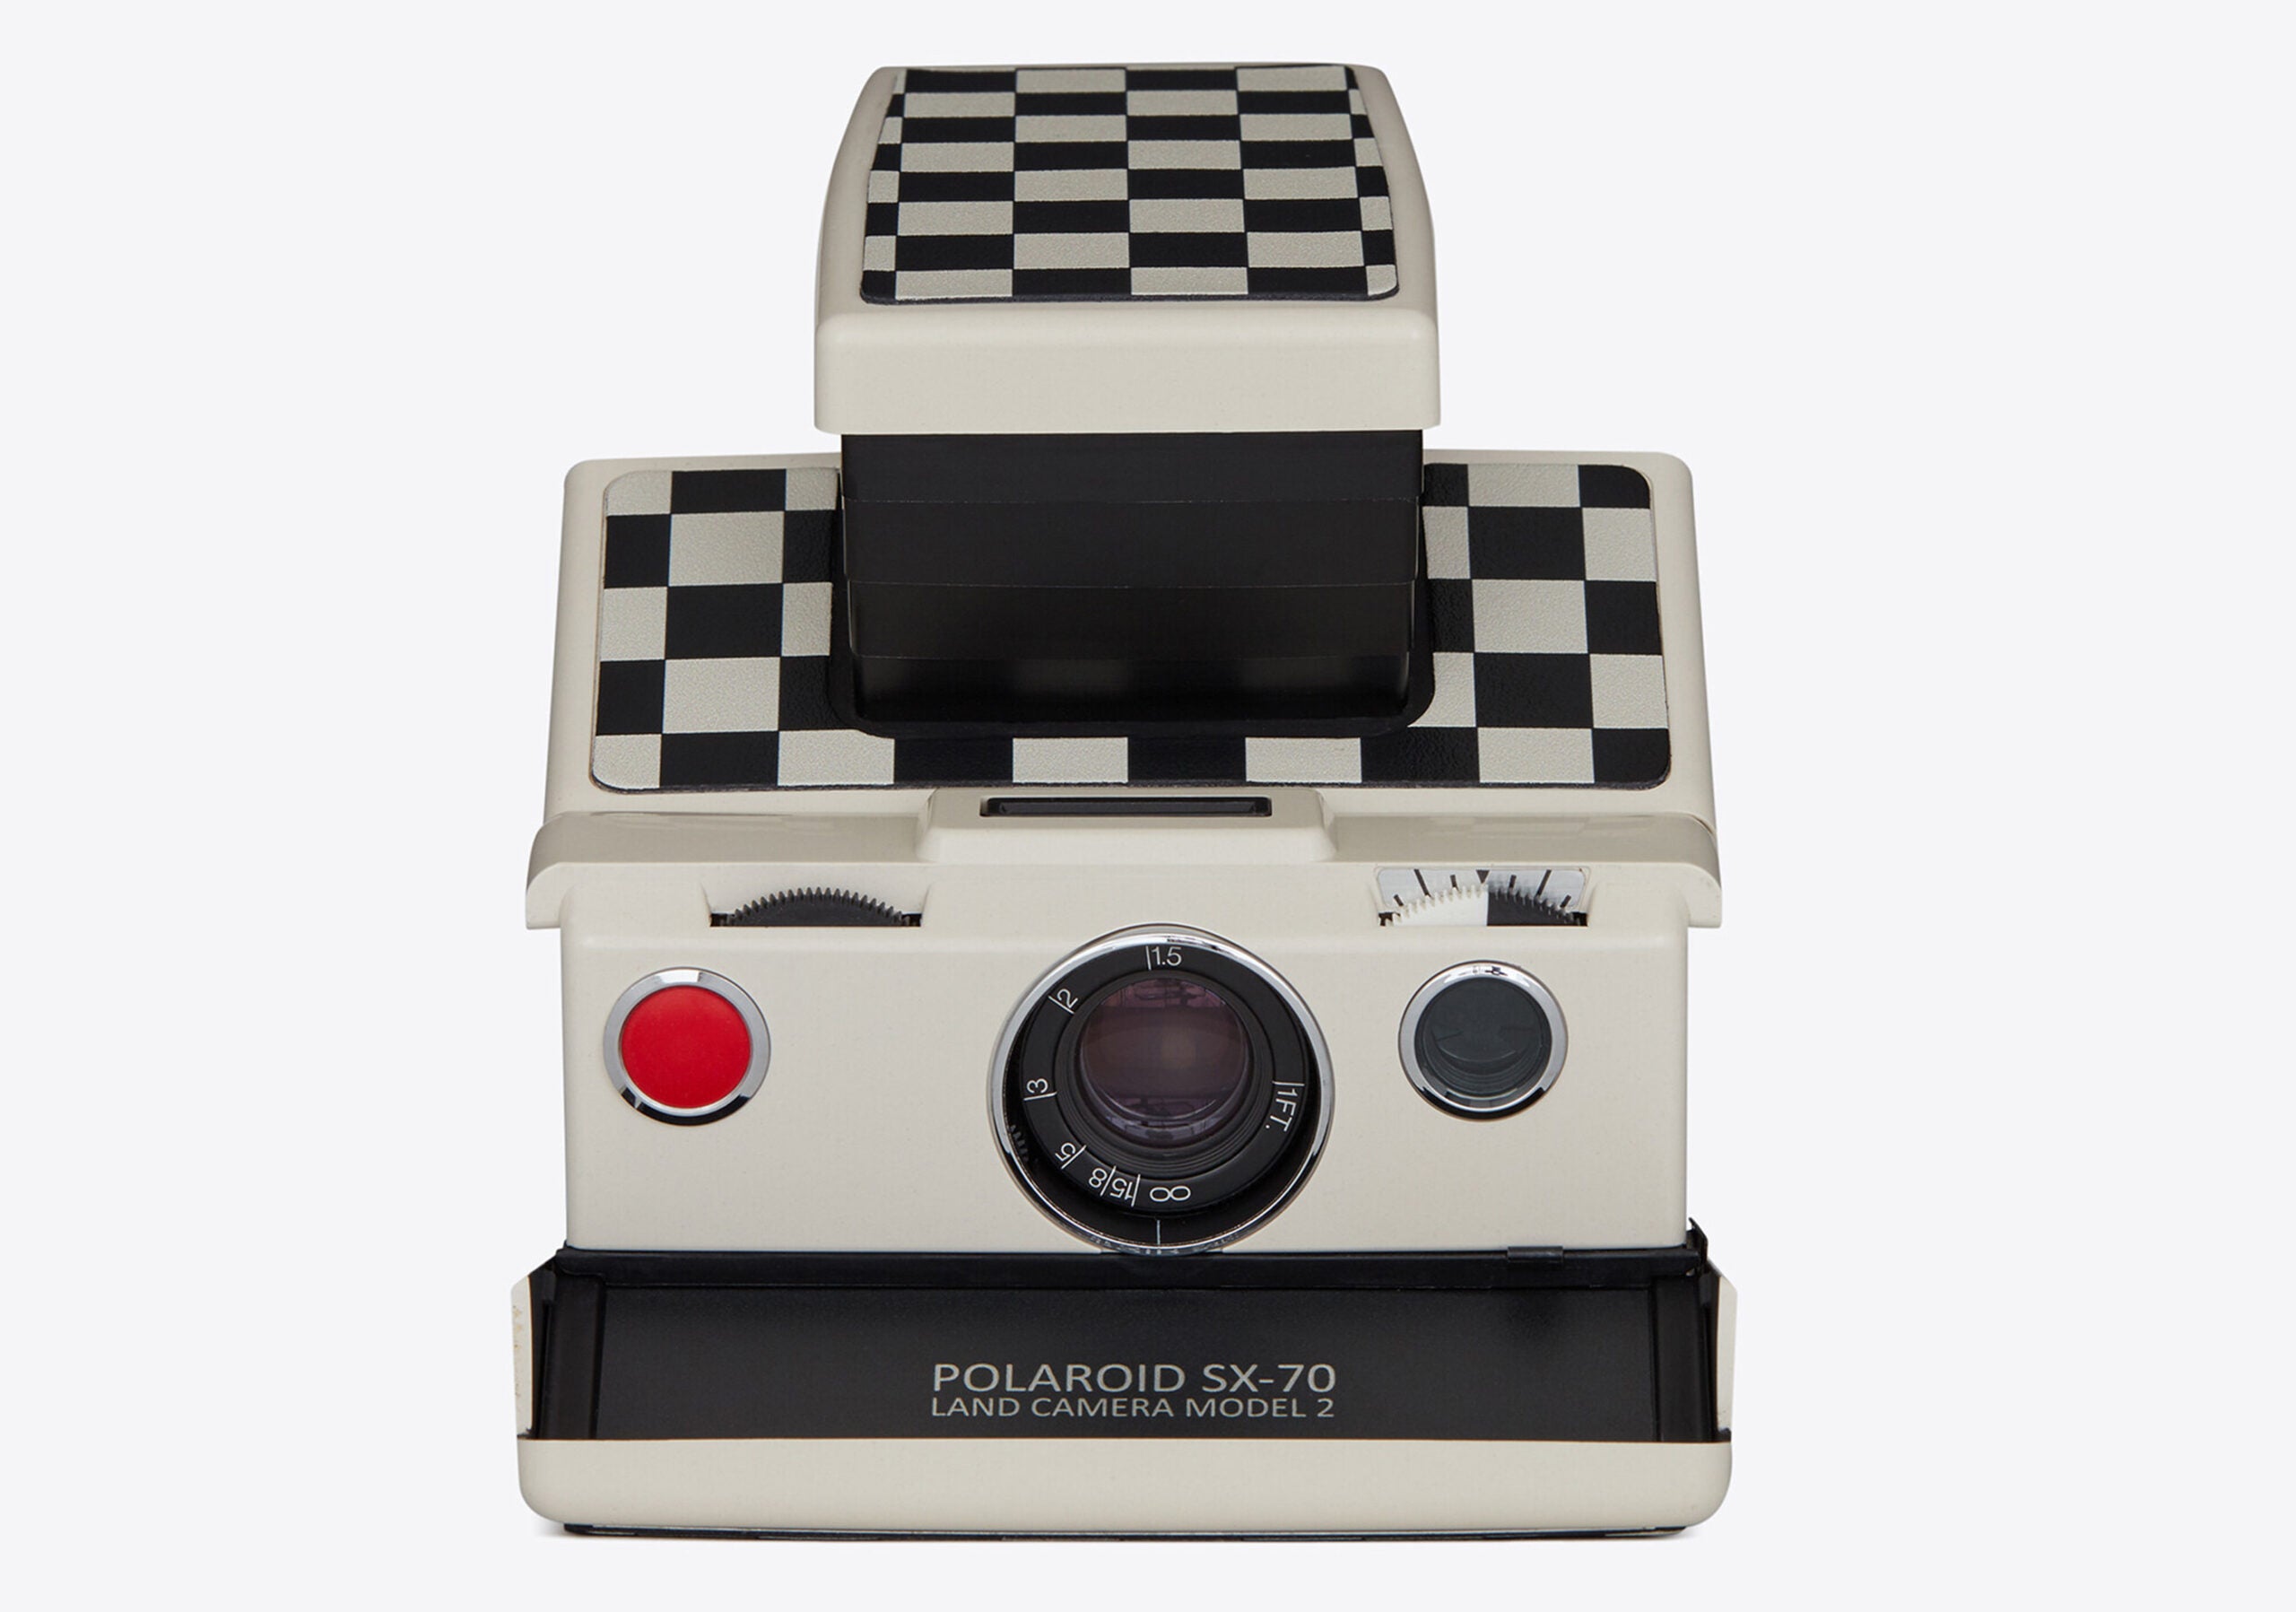 The Checkered Polaroid SXâ70